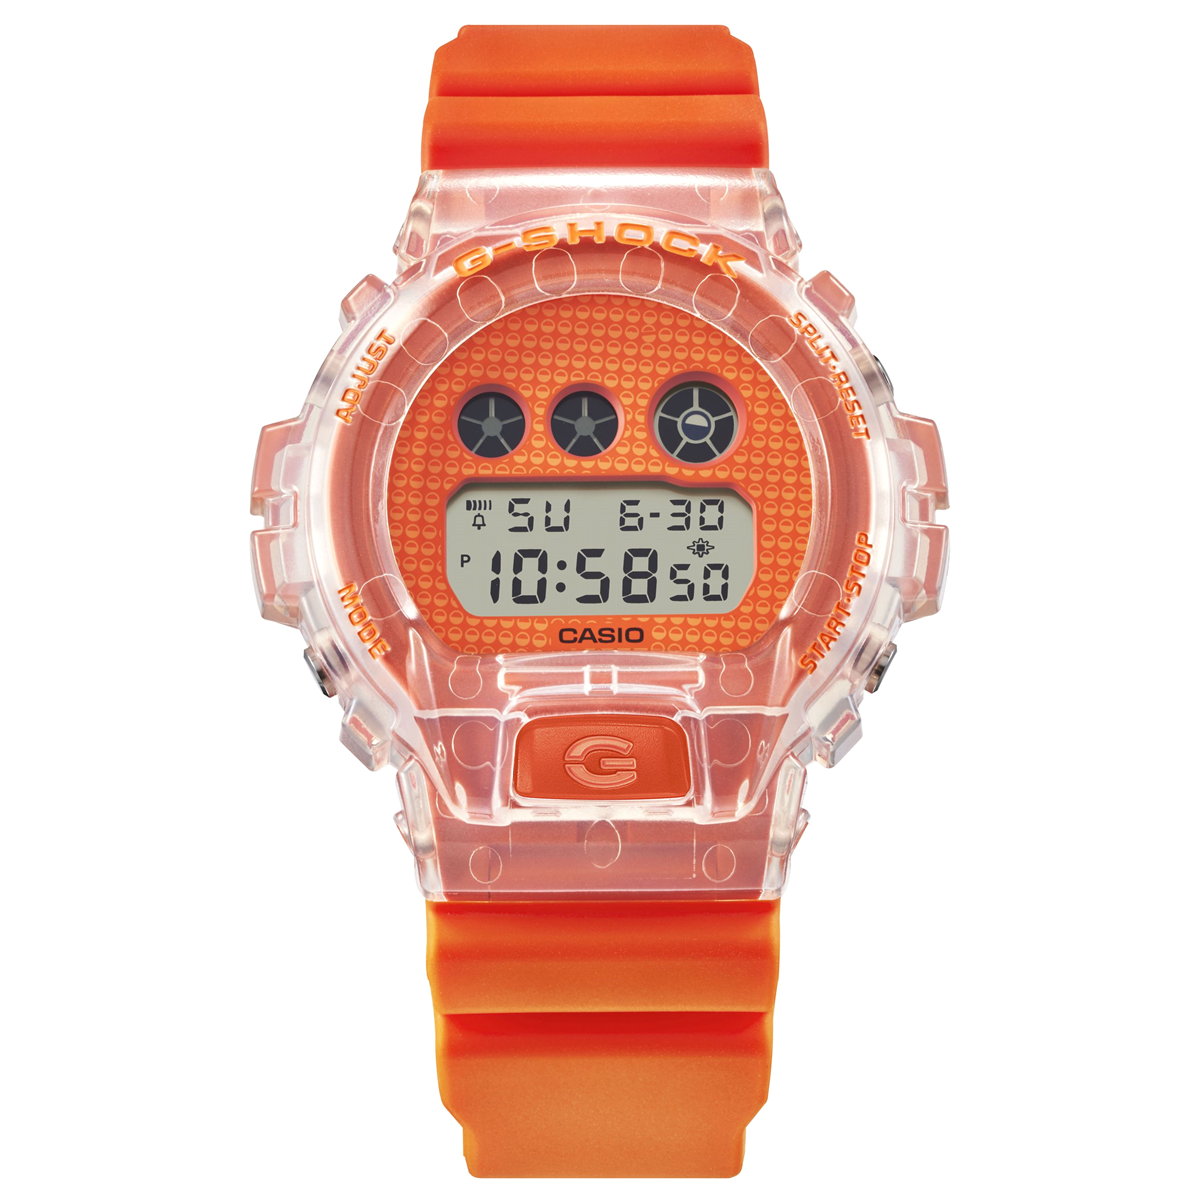 G-SHOCK デジタル カシオ Gショック CASIO デジタル 腕時計 メンズ DW-6900GL-4JR カプセルトイ イメージ Lucky Drop オレンジ